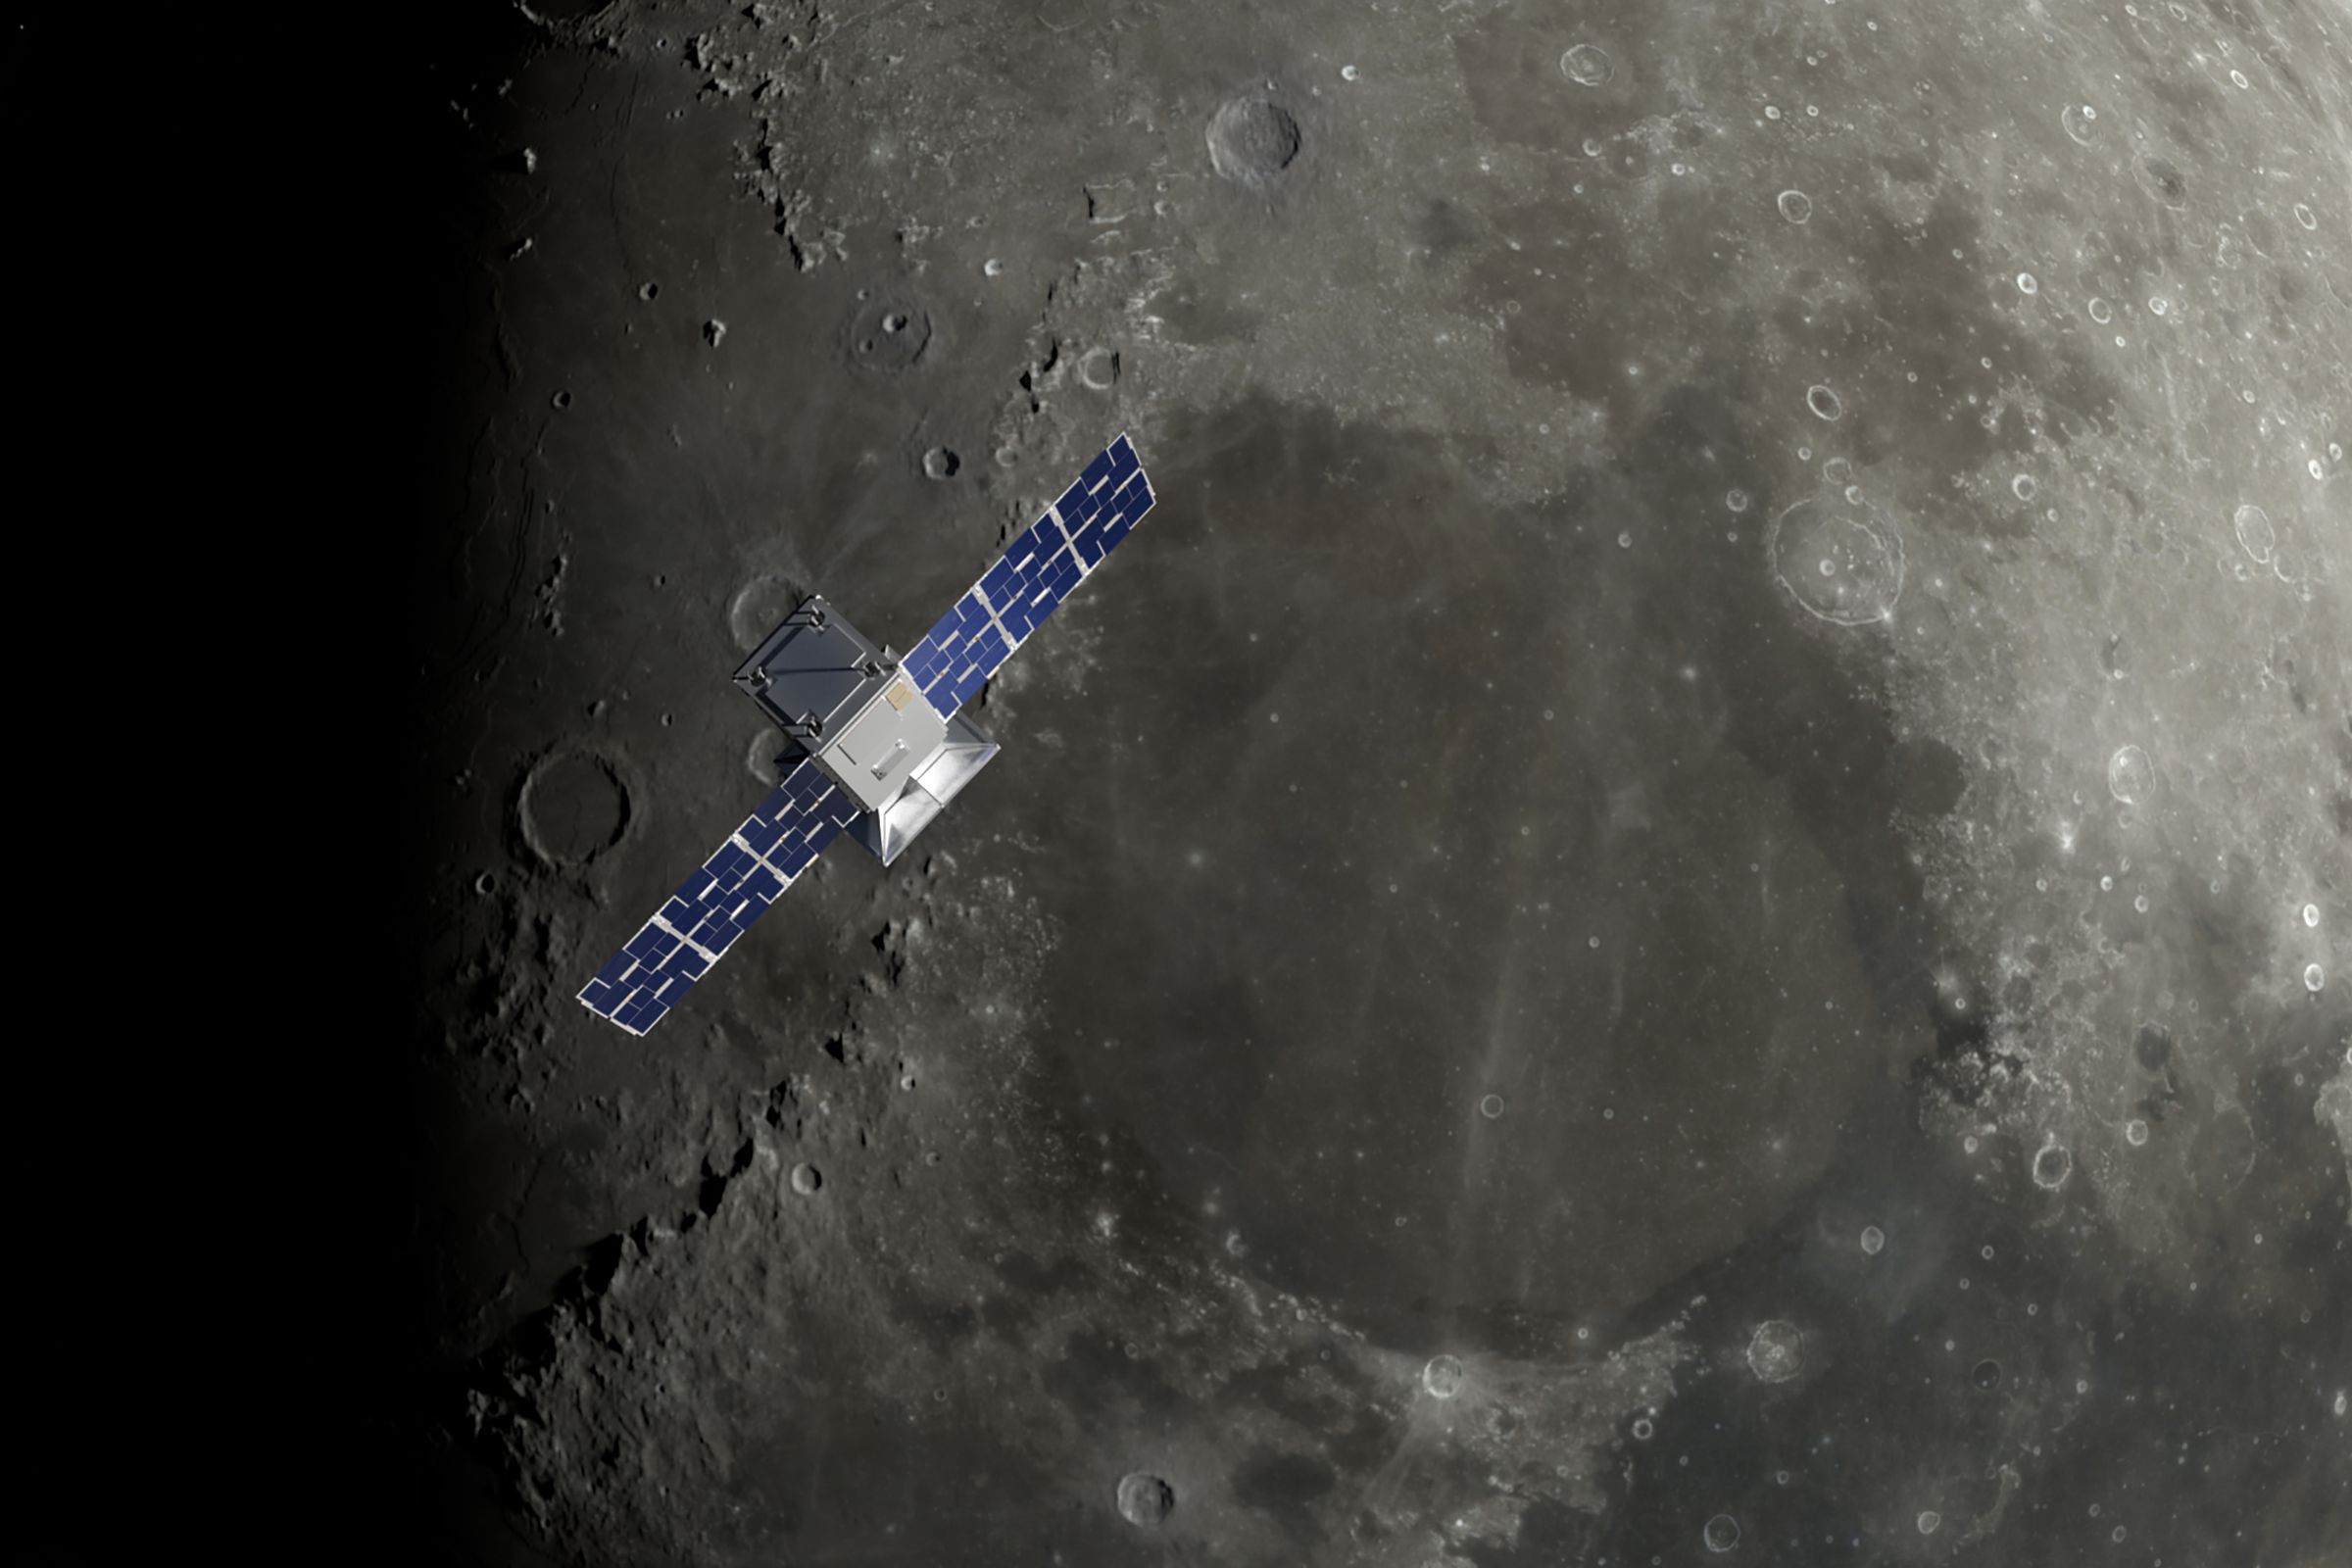 An artistic rendering of CAPSTONE in orbit around the Moon